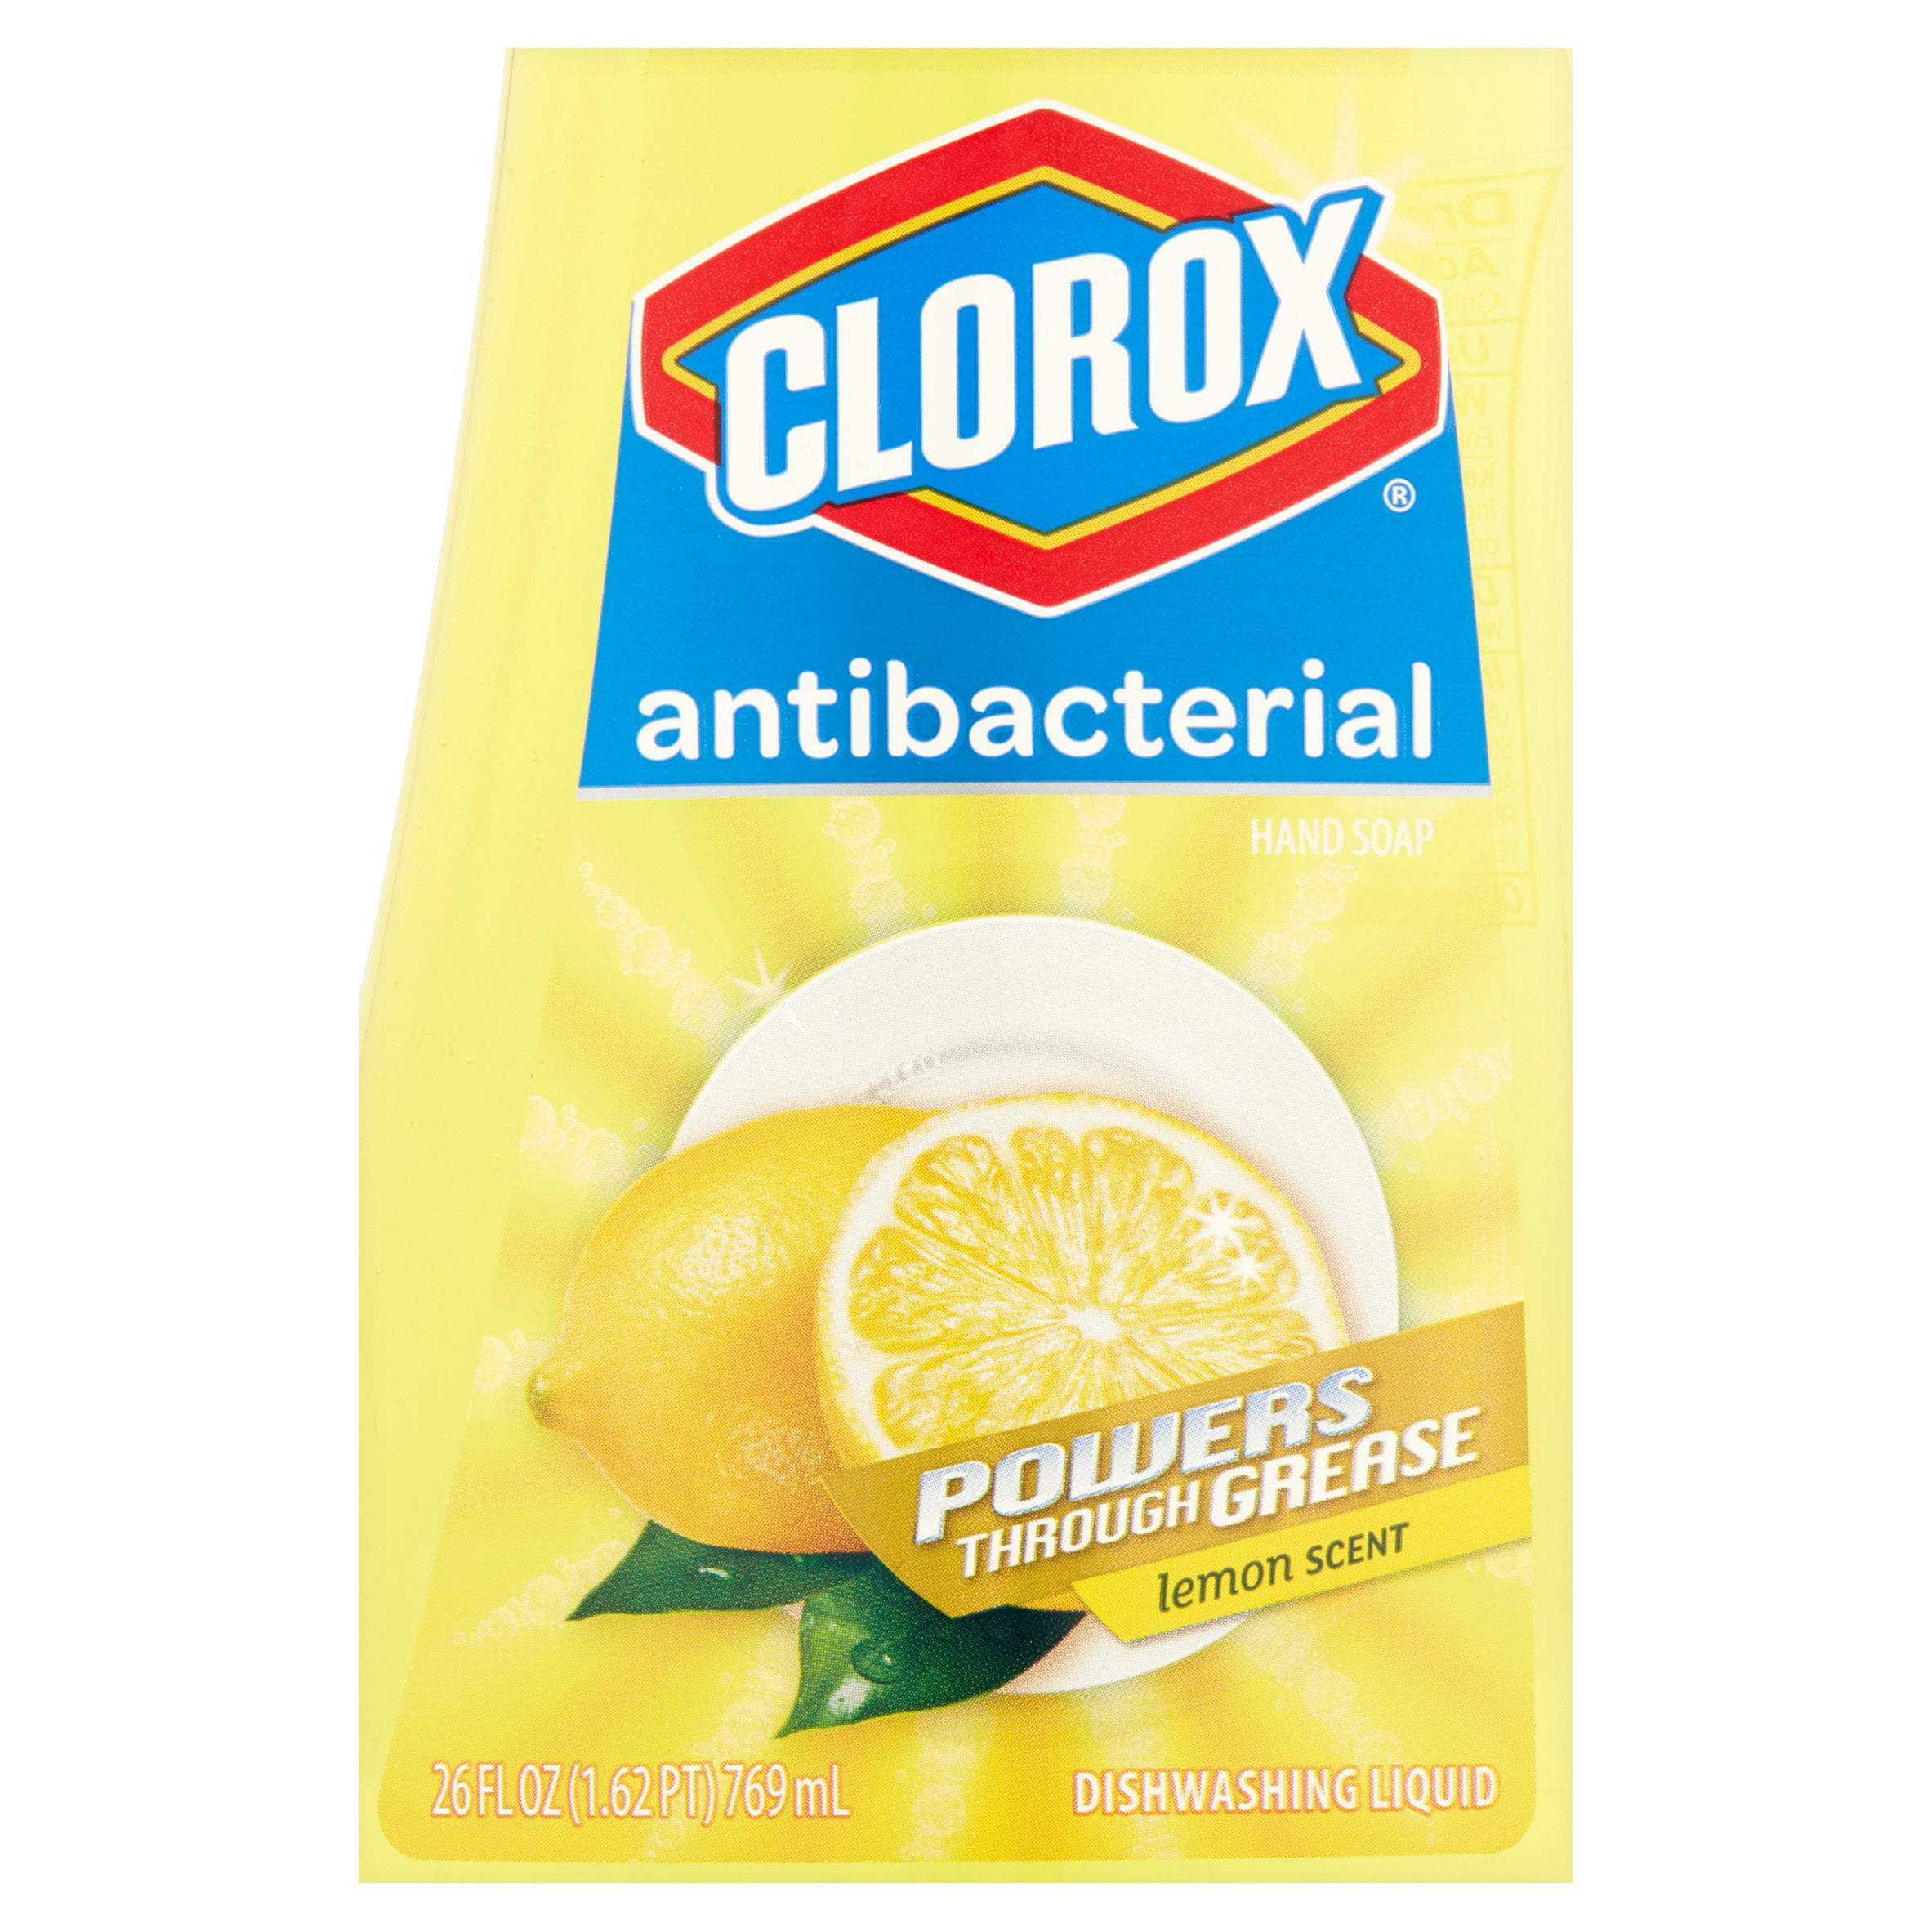 Clorox Dishwashing Liquid Soap with 409 in Citrus & Sage Scent, 26